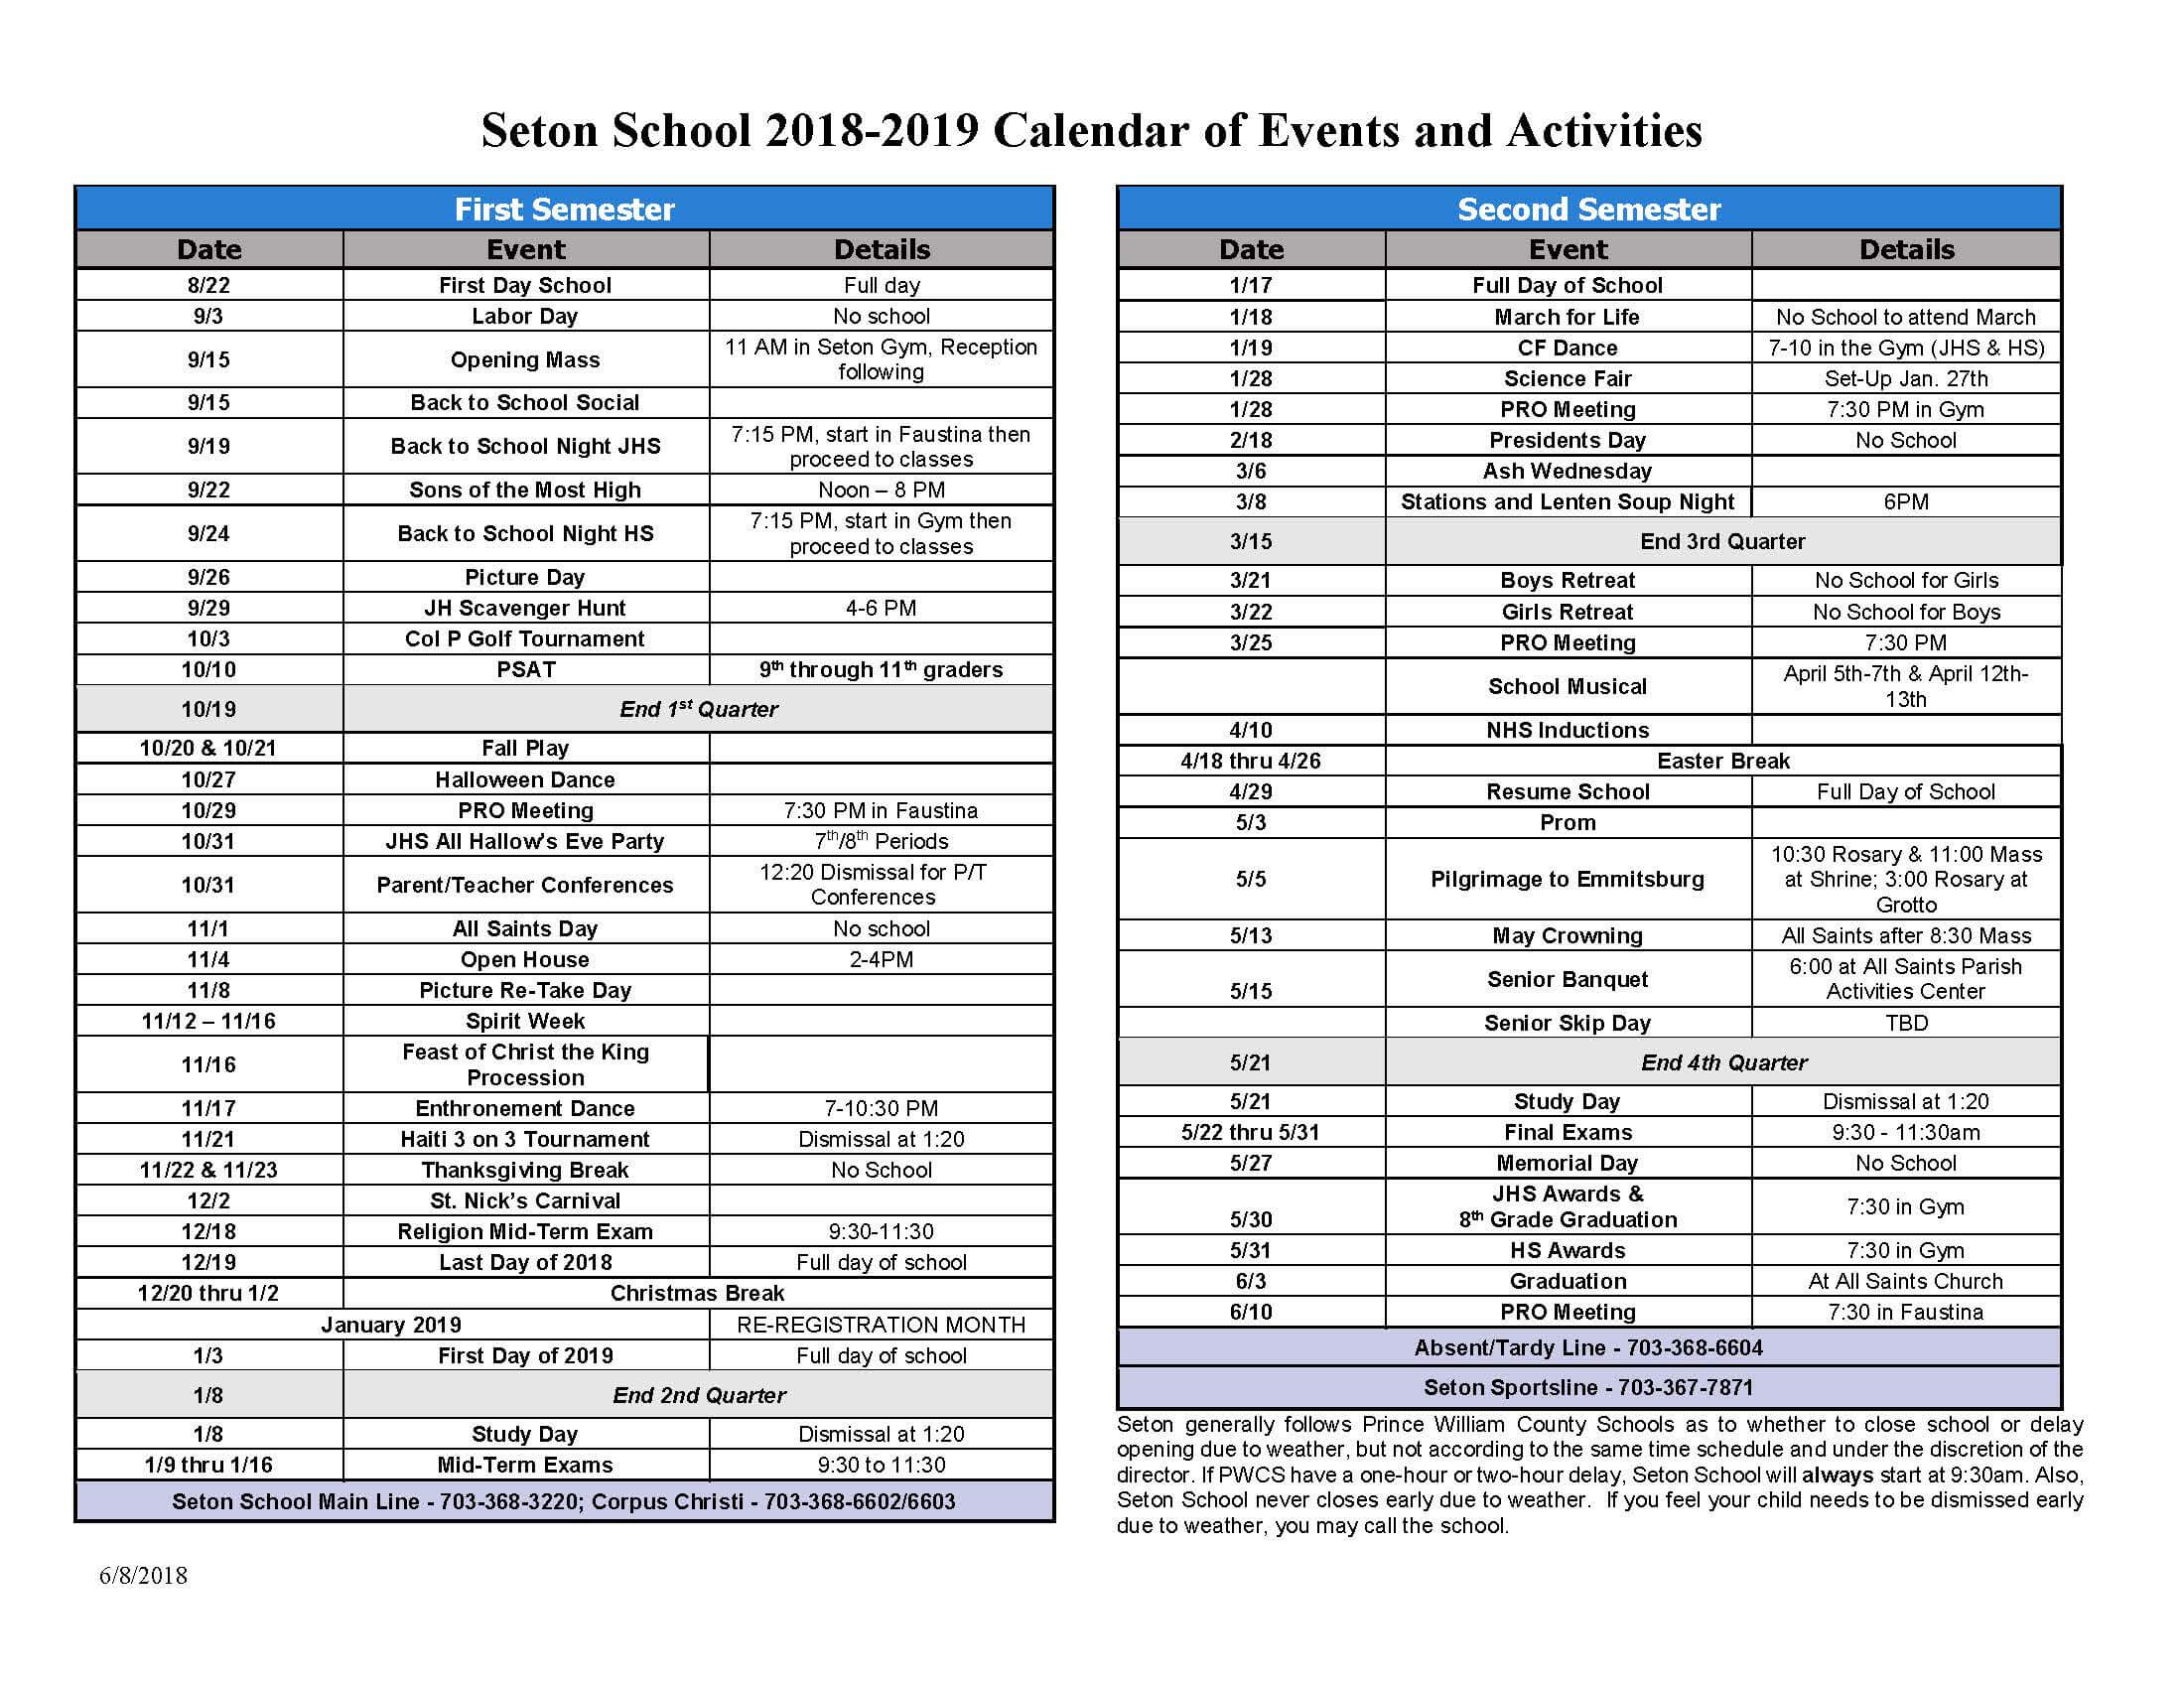 2018-2019 Seton School Calendar of Events and Activities | Seton School Manassas